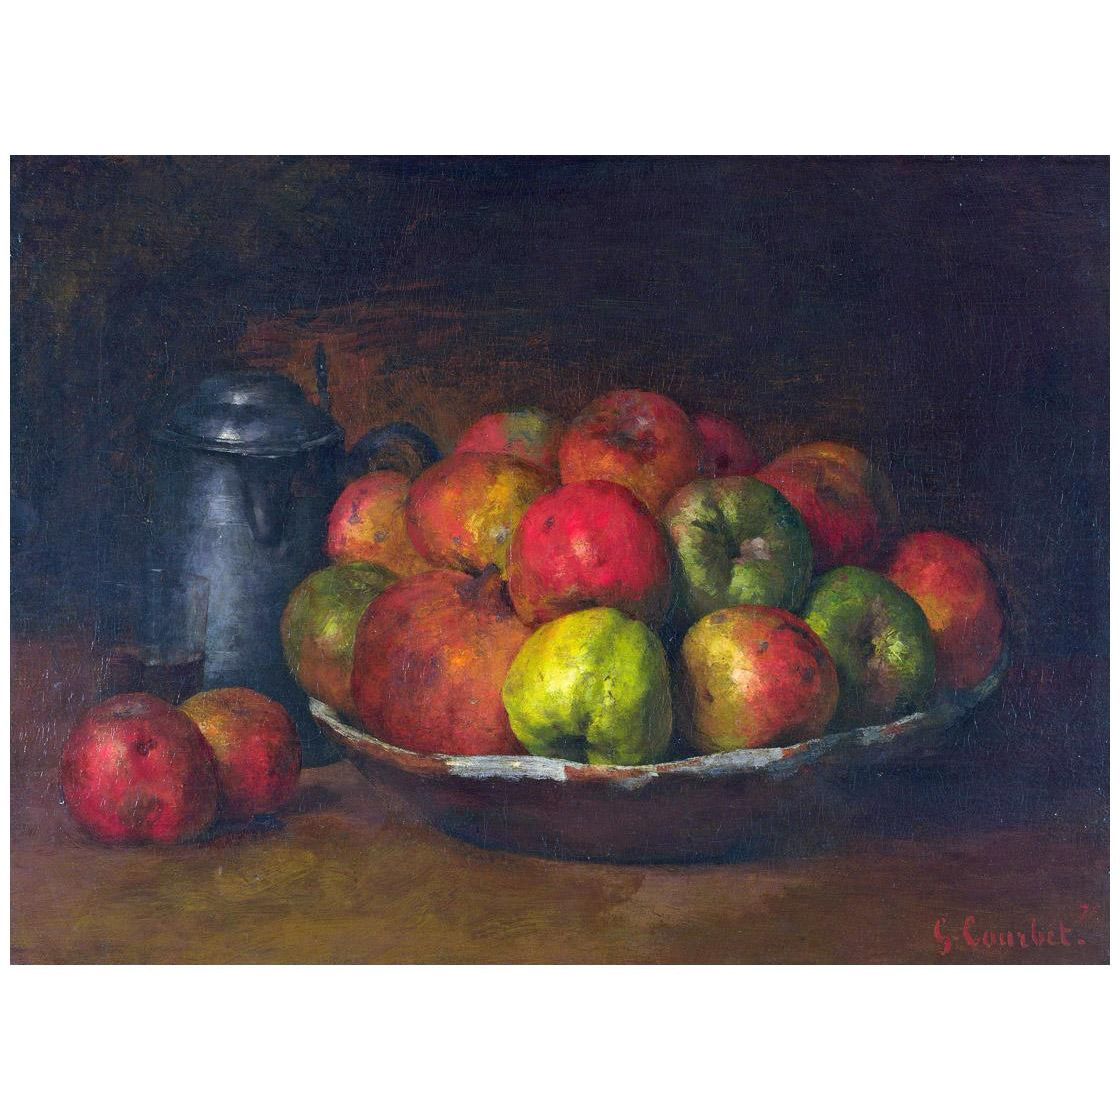 Gustave Courbet. Nature morte avec des pommes. 1871. National Gallery London